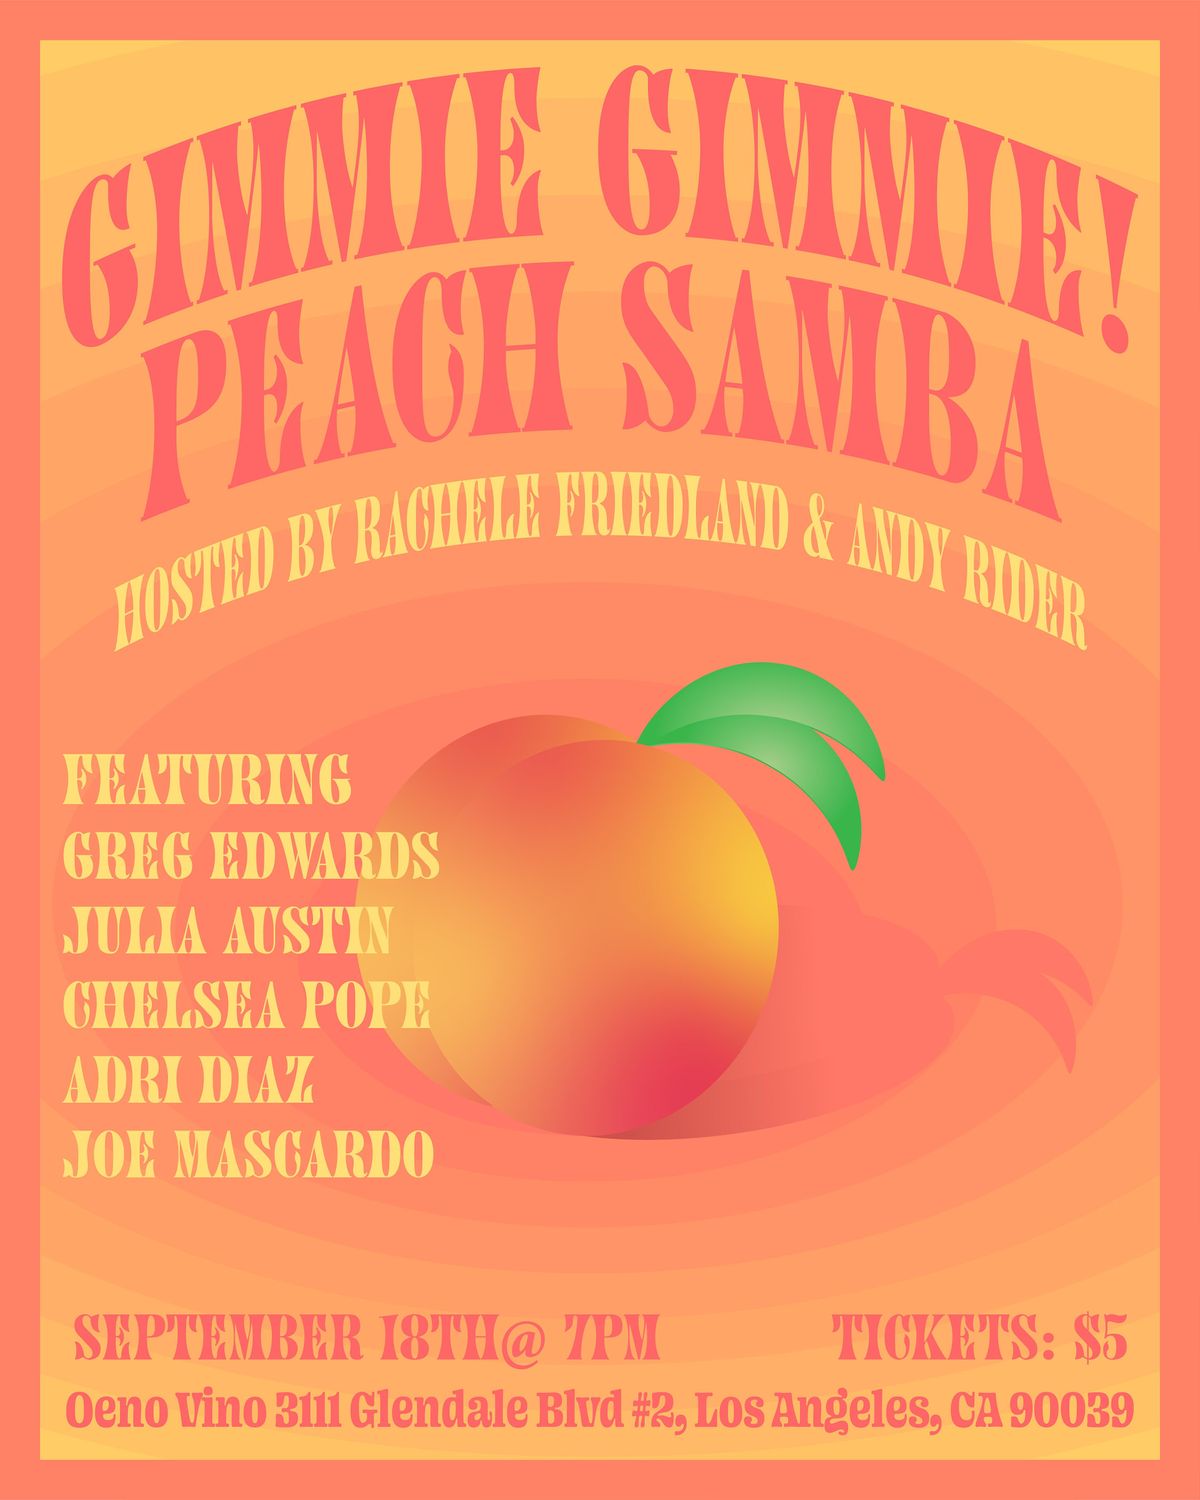 Gimmie Gimmie! Peach Samba in September